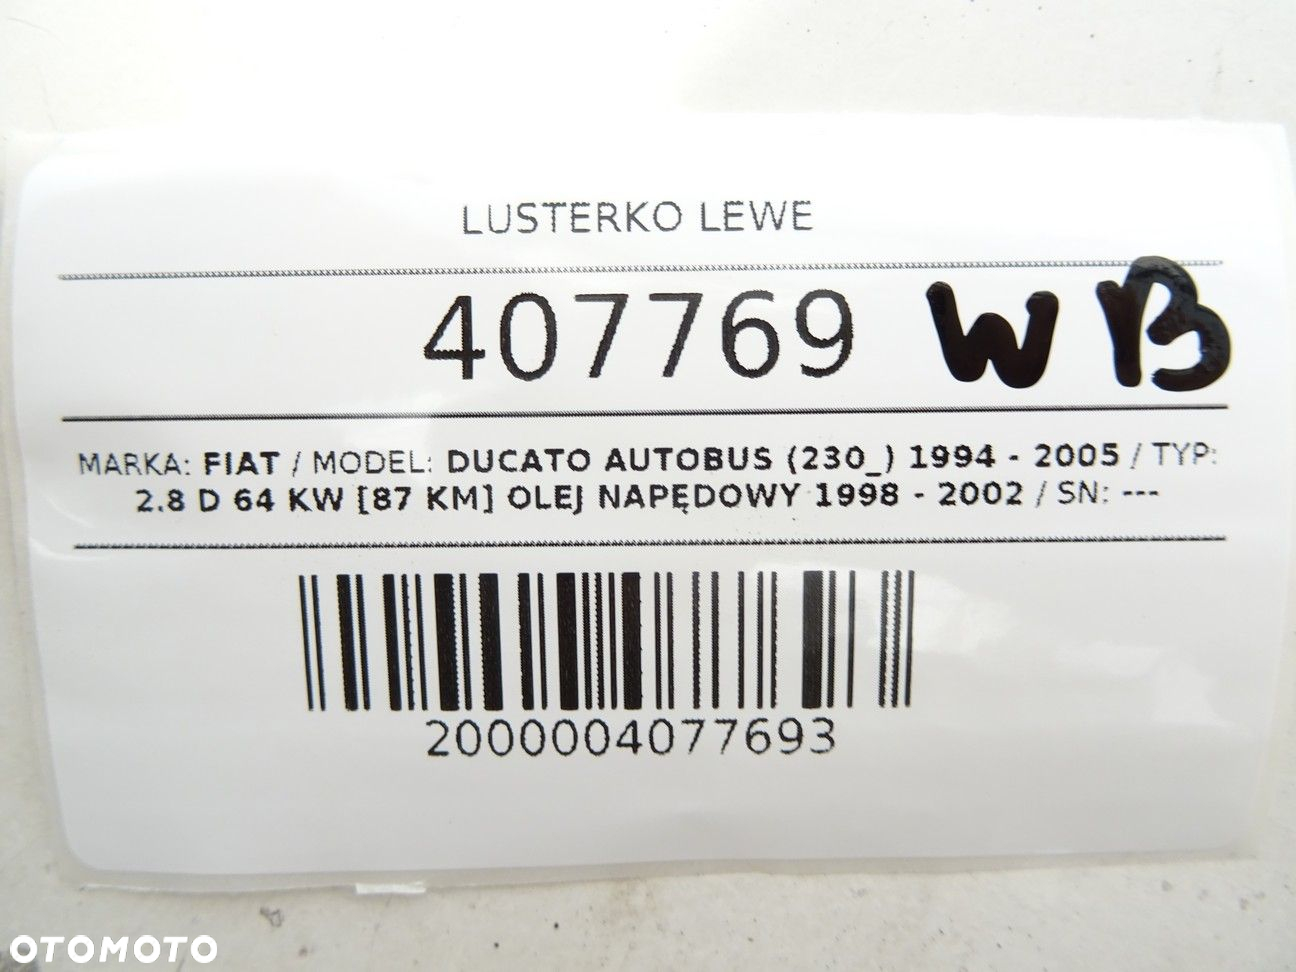 LUSTERKO LEWE FIAT DUCATO Autobus (230_) 1994 - 2005 2.8 D 64 kW [87 KM] olej napędowy 1998 - 2002 - 5